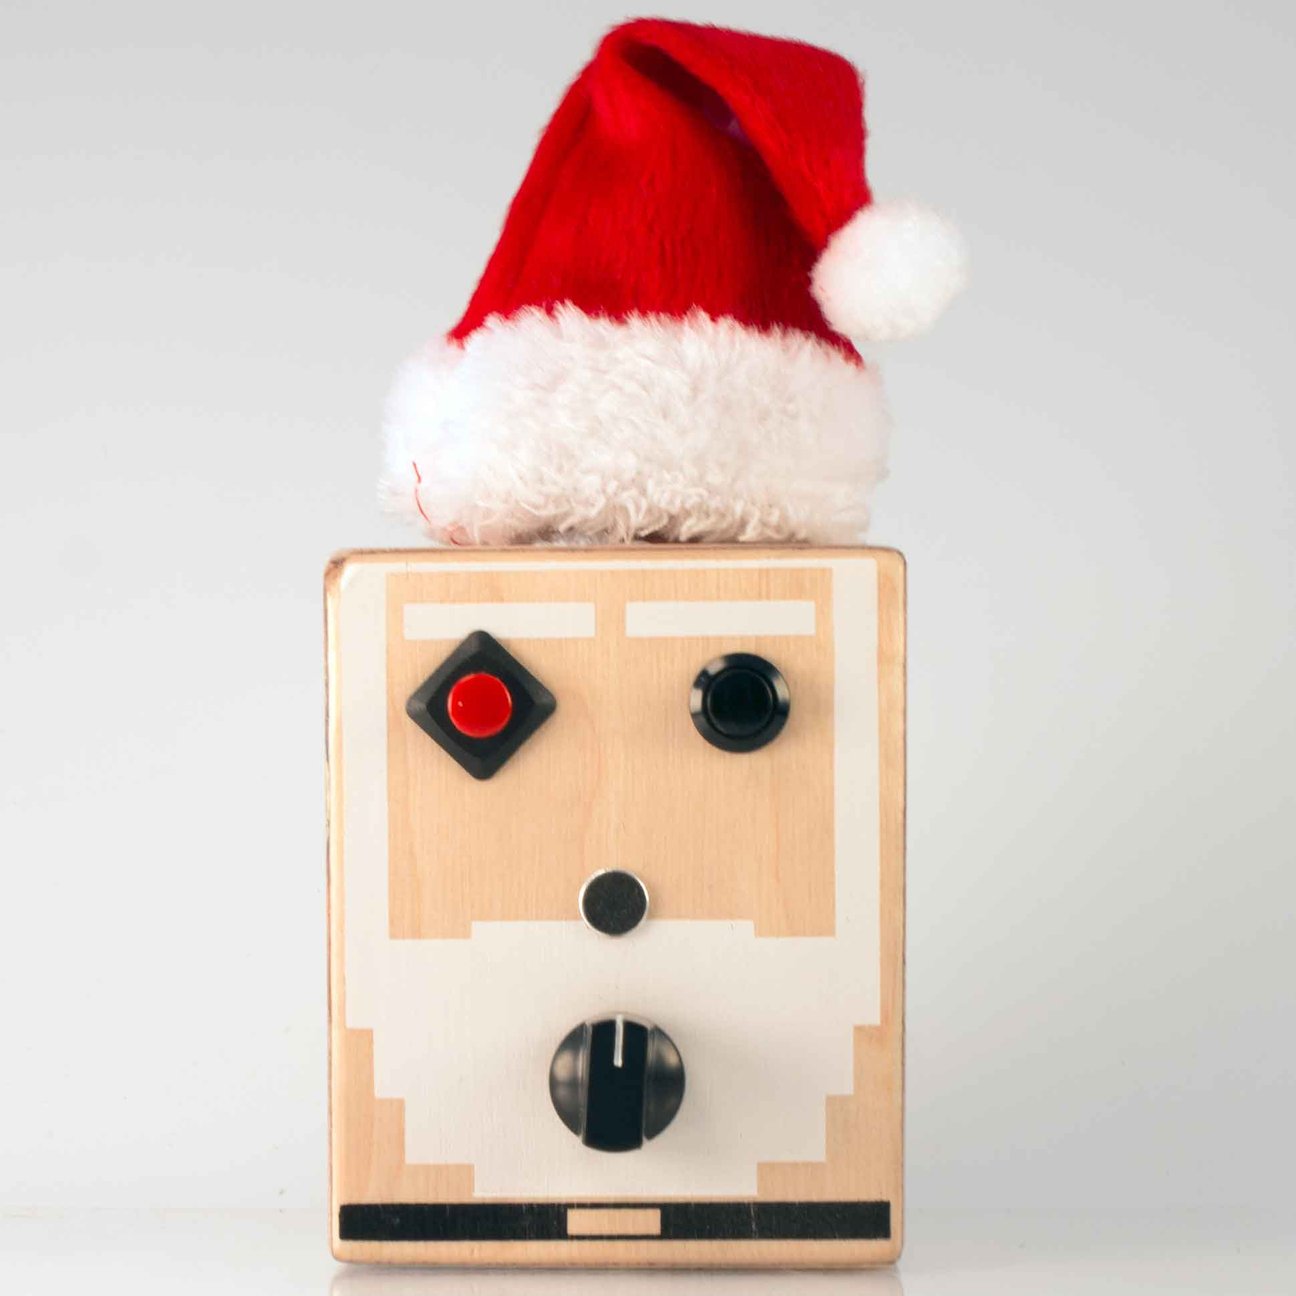 Handmade toys for kids: 8-bit Santa handmade wooden sound machine by Brand New Noise